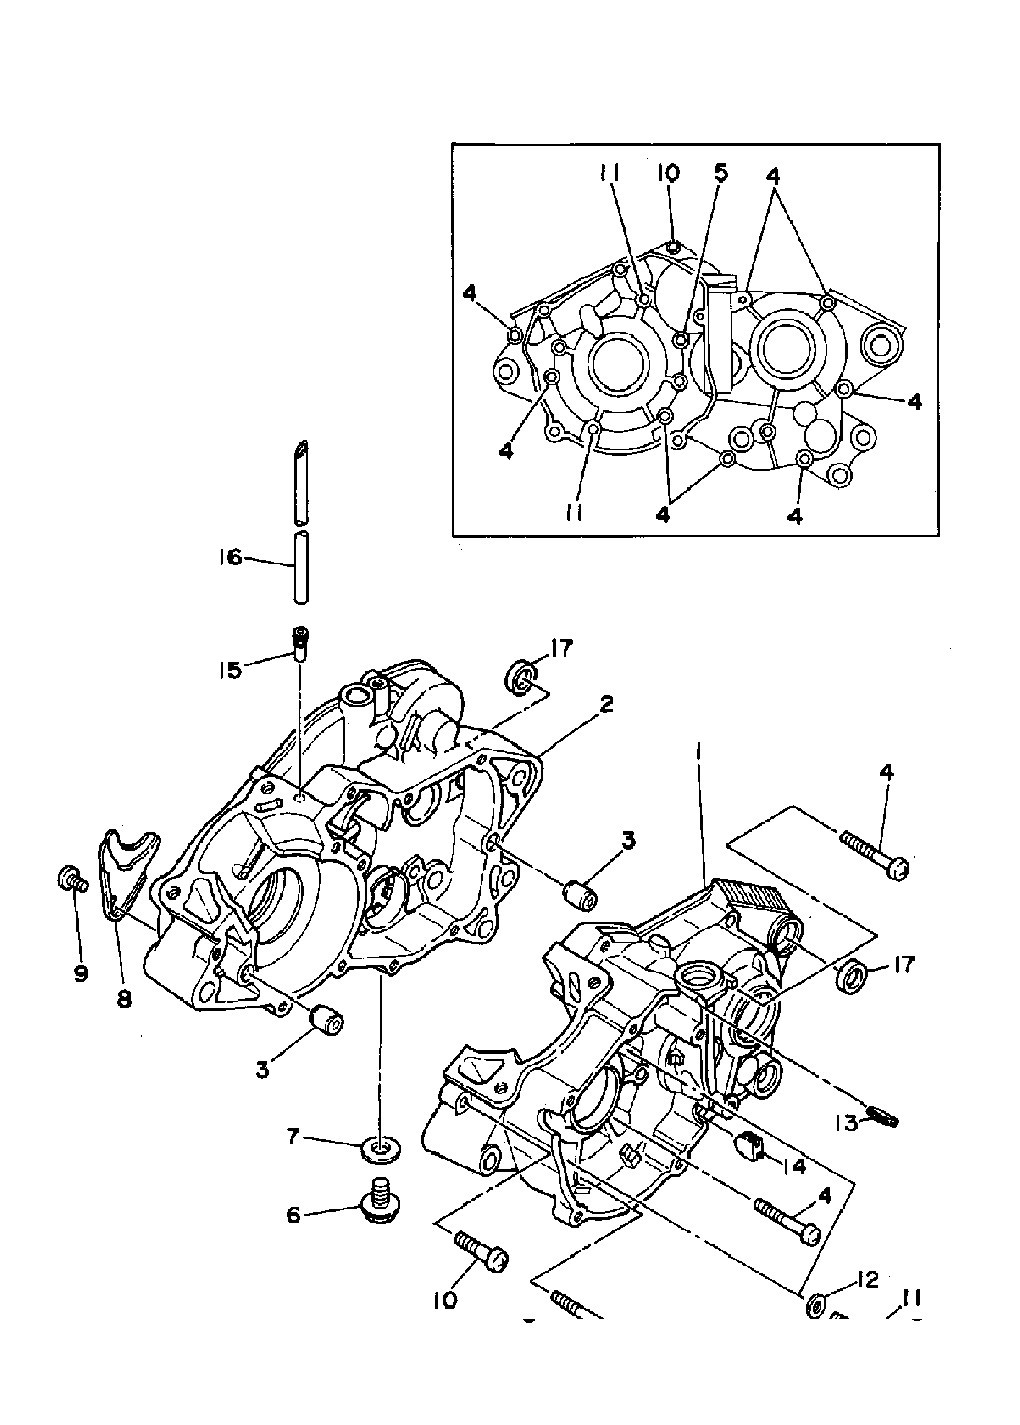 Yamaha Banshee Wiring Harness also Honda Cb750 Sohc Engine Diagram besides Yamaha Bear Tracker Starter Relay